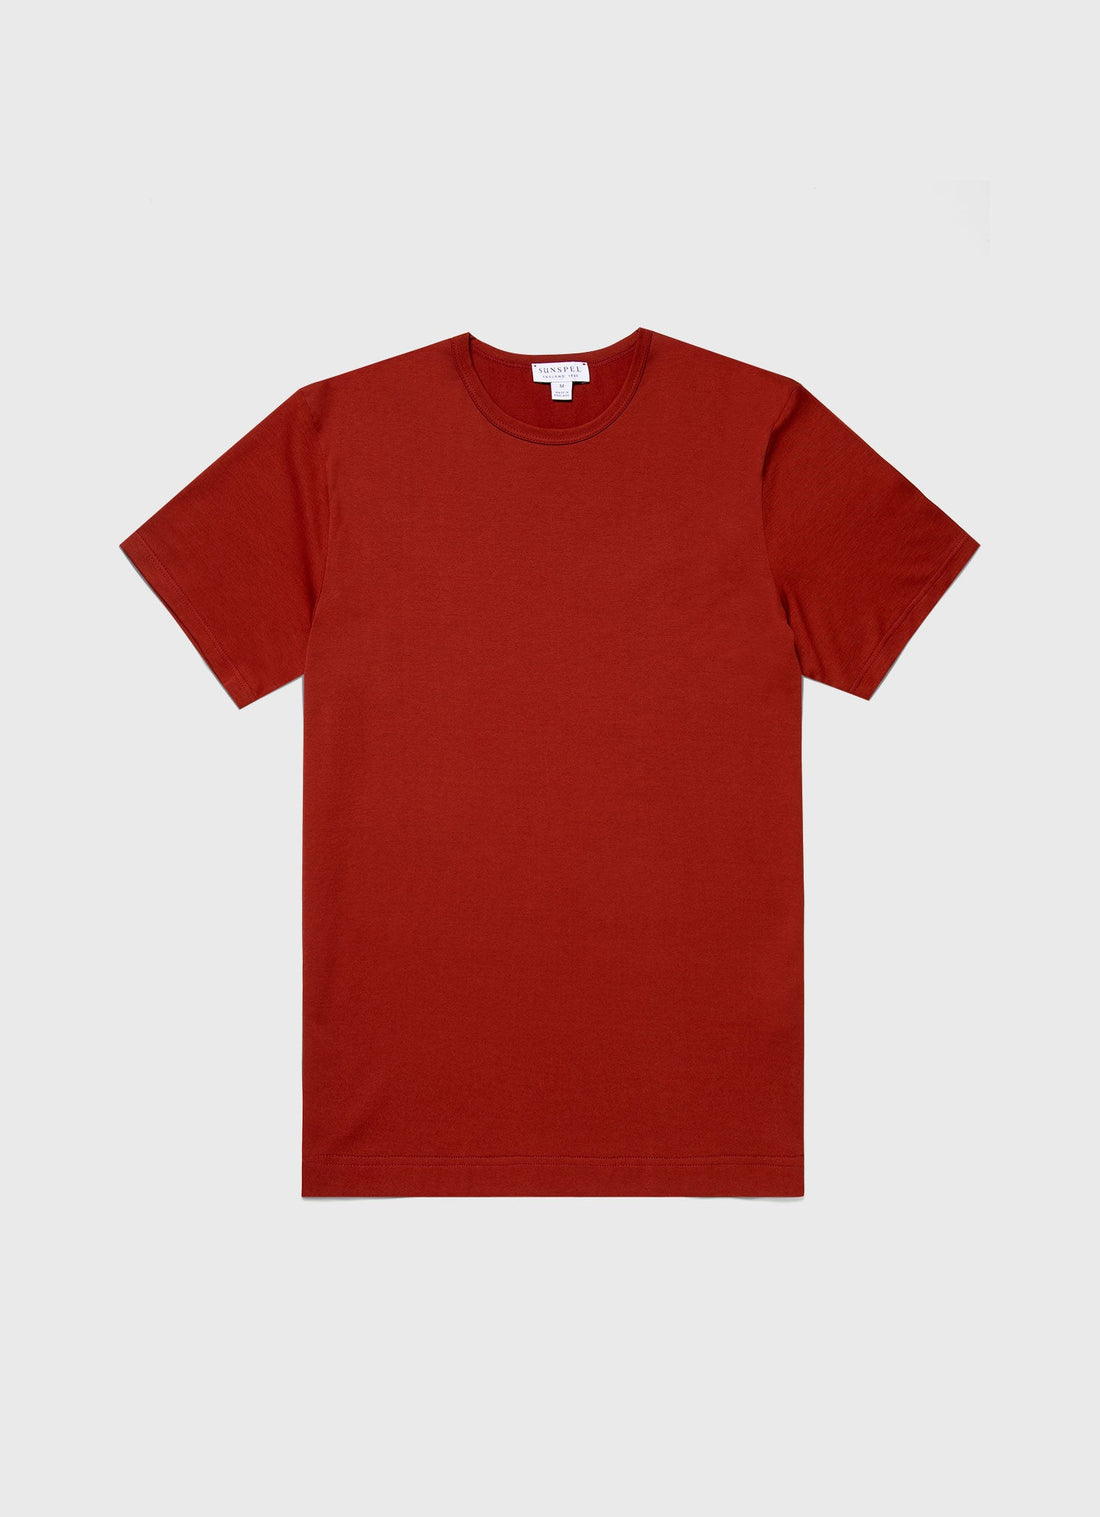 Men's Classic T-shirt in Rust